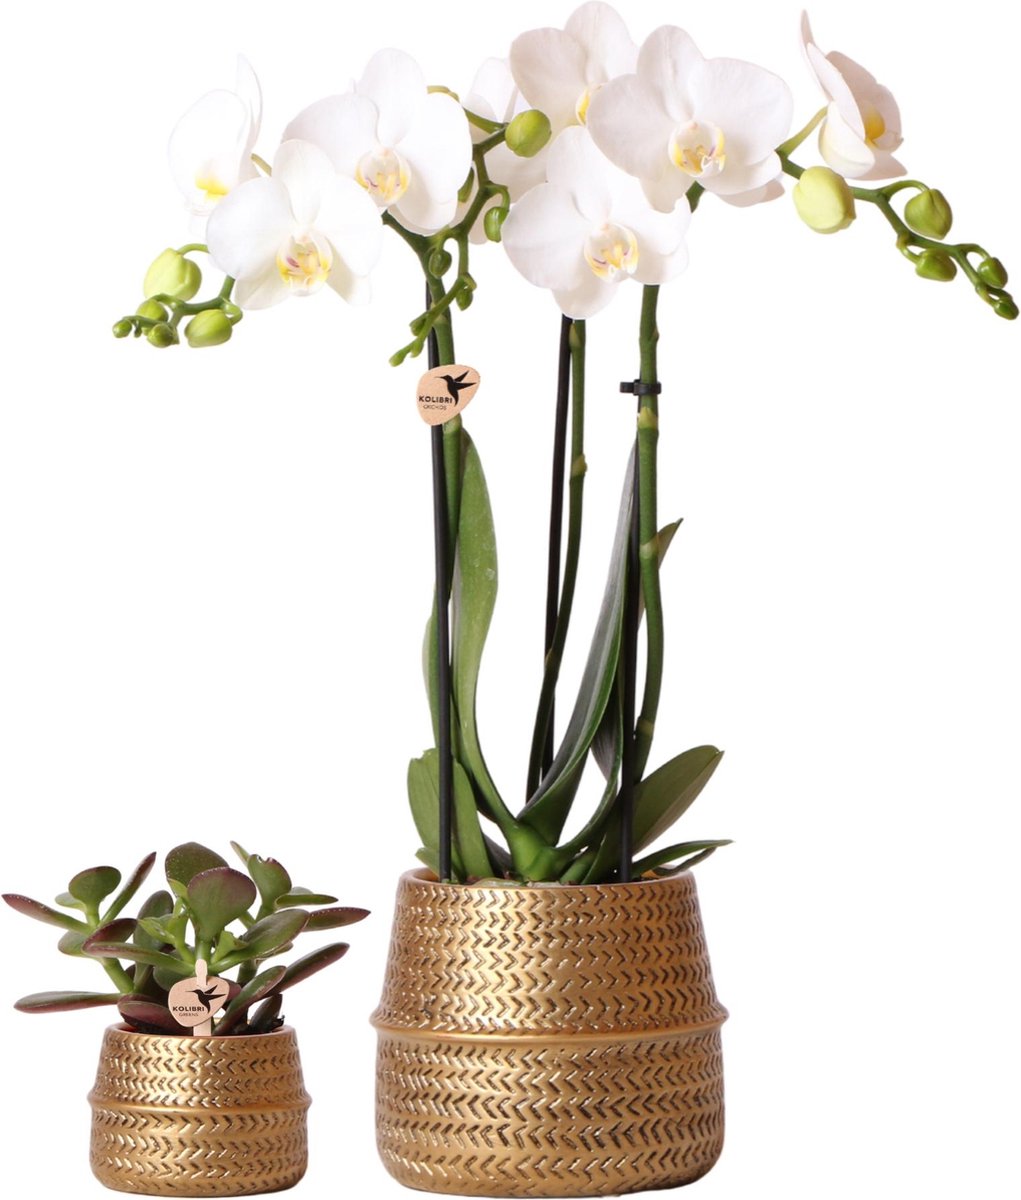 Kolibri Company - Planten set Groove goud | Set met witte Phalaenopsis orchidee Amabilis Ø9cm en groene plant Succulent Crassula Ovata Ø6cm | incl. gouden keramieken sierpotten